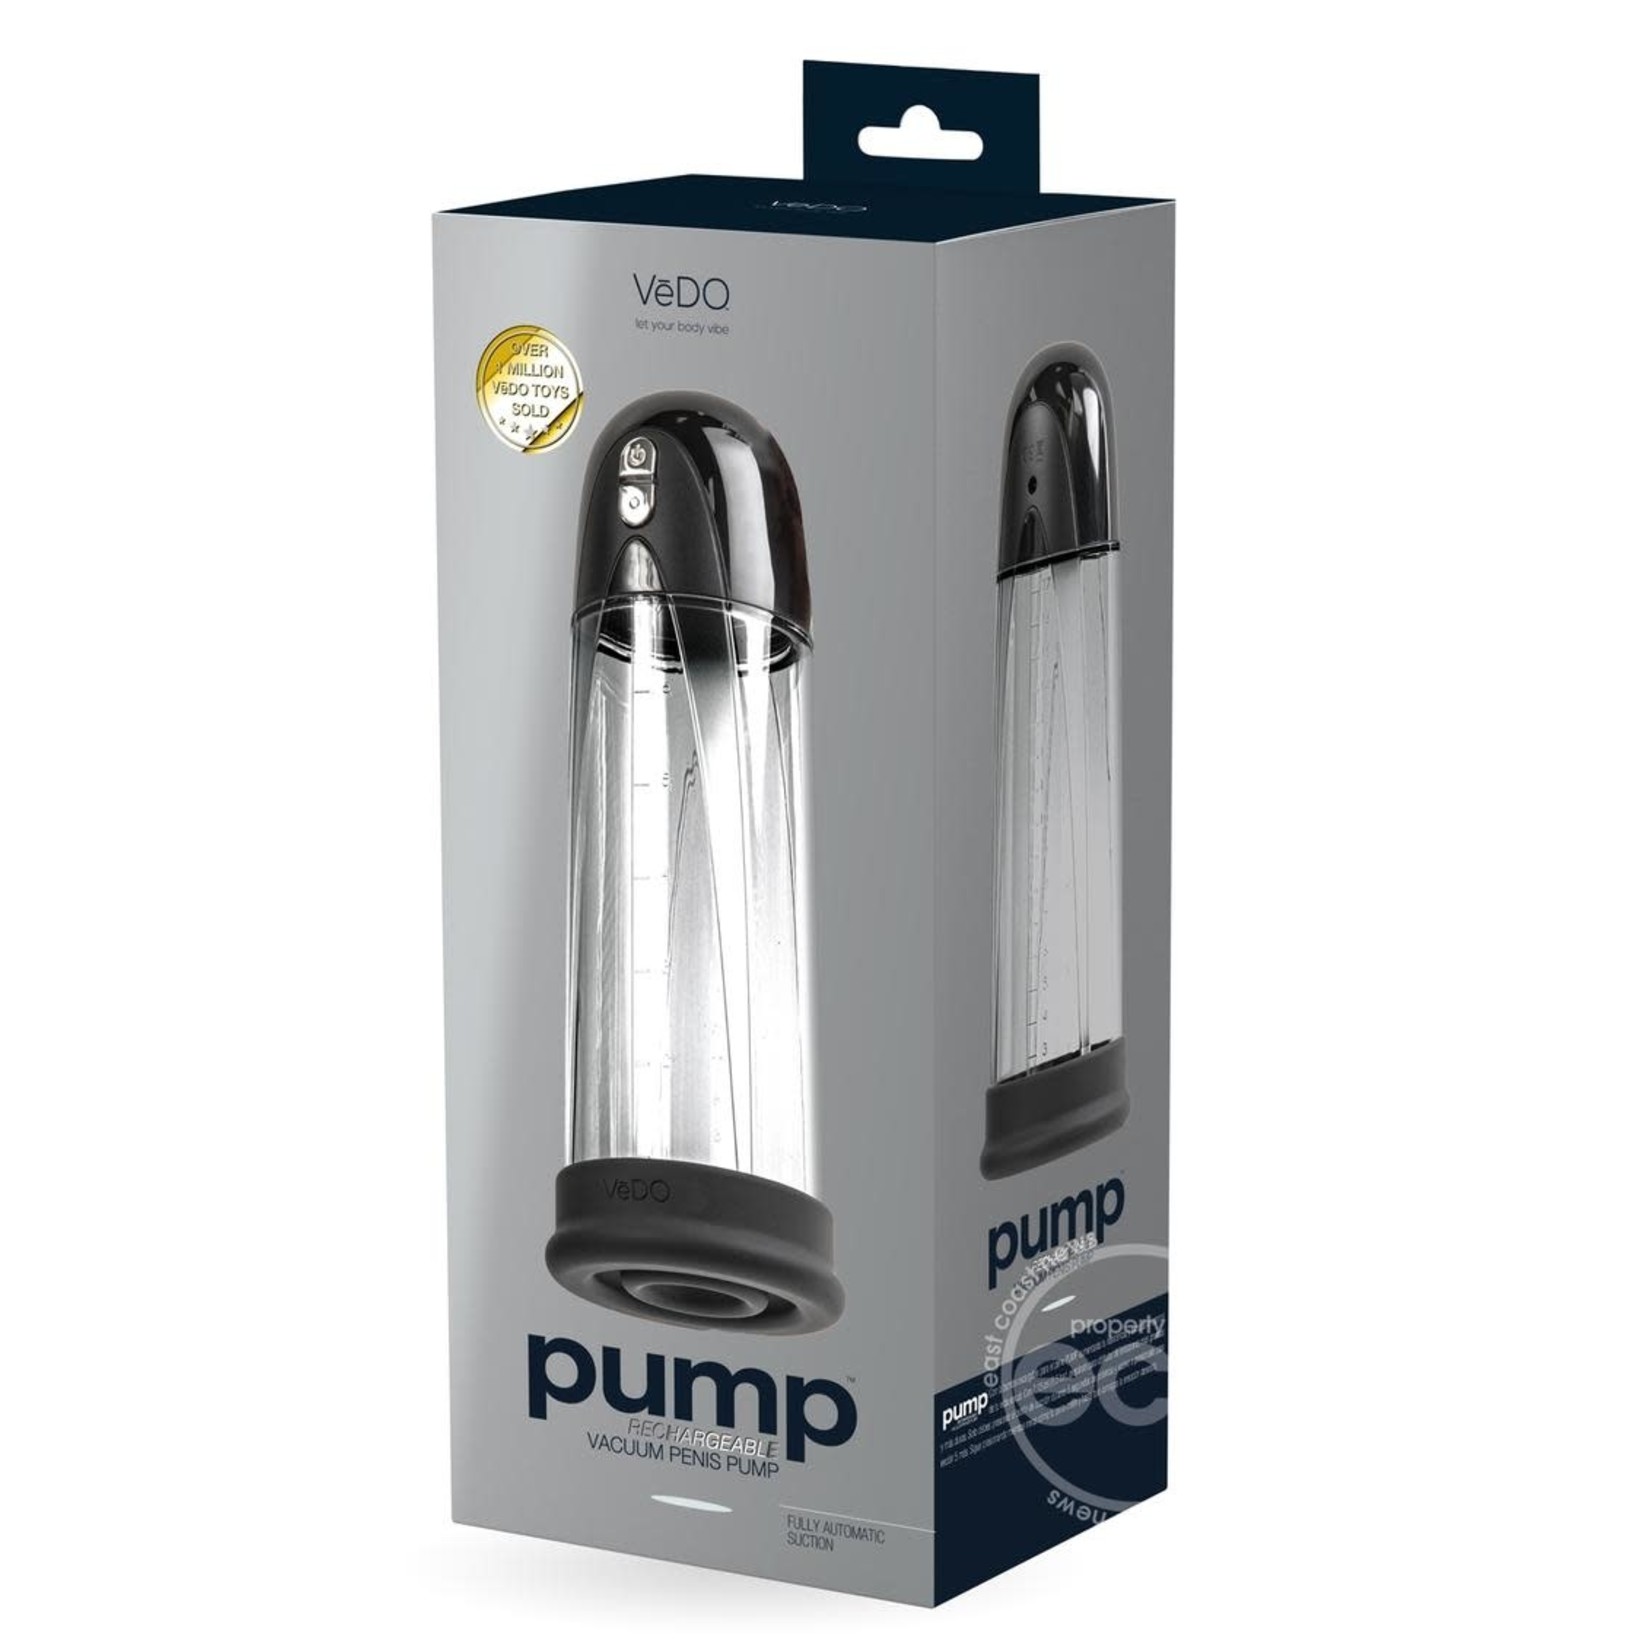 VeDO Pump Rechargeable Silicone Vacuum Penis Pump - Just Black